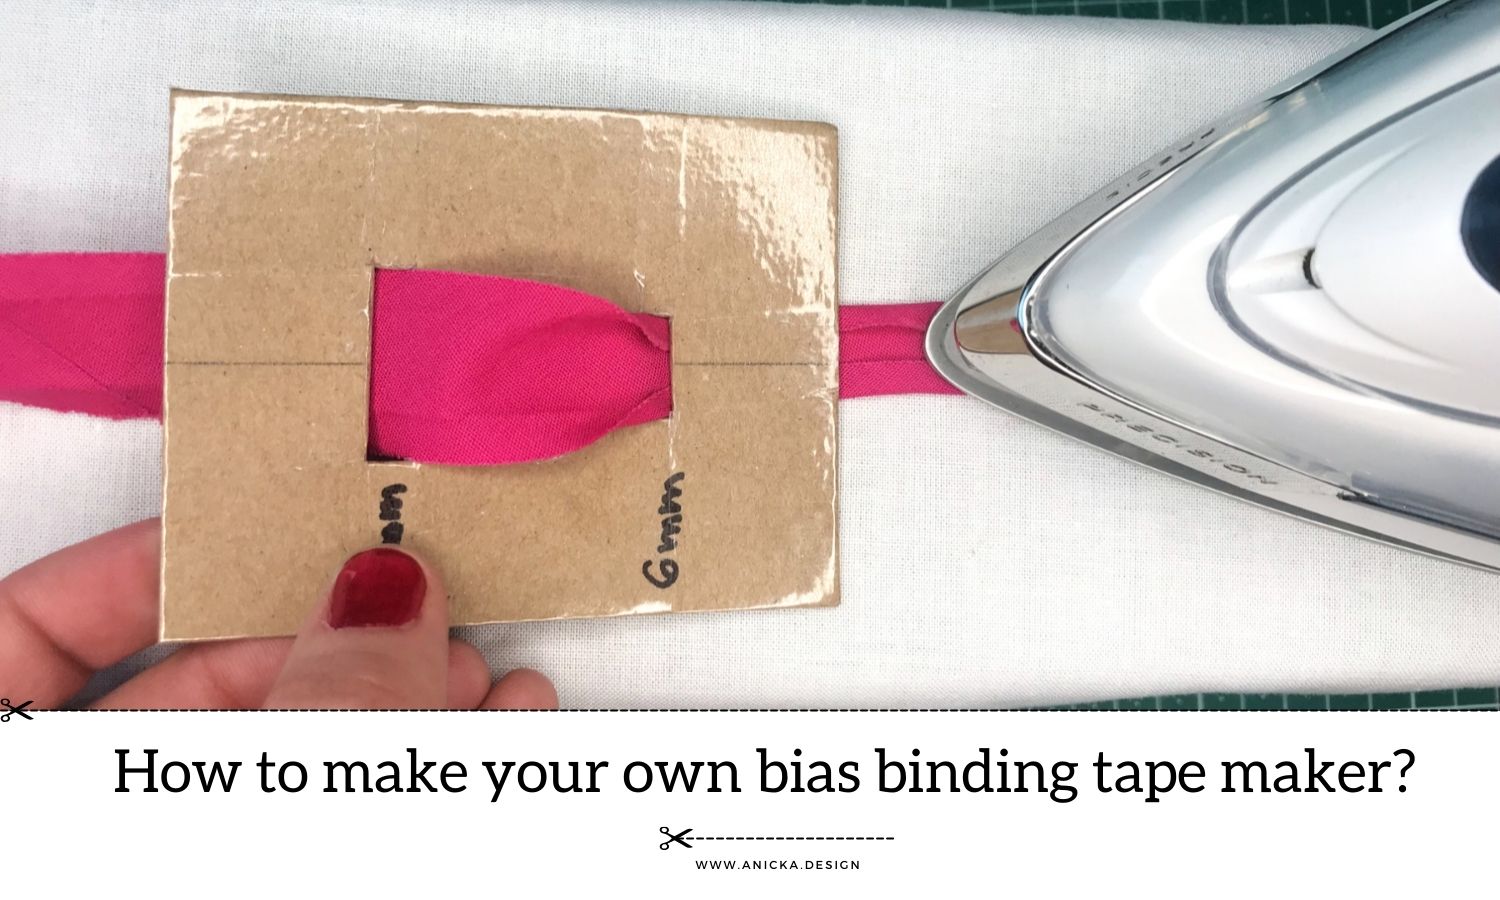 Using a cardboard DIY bias binding tape maker to make a custom binding tape.